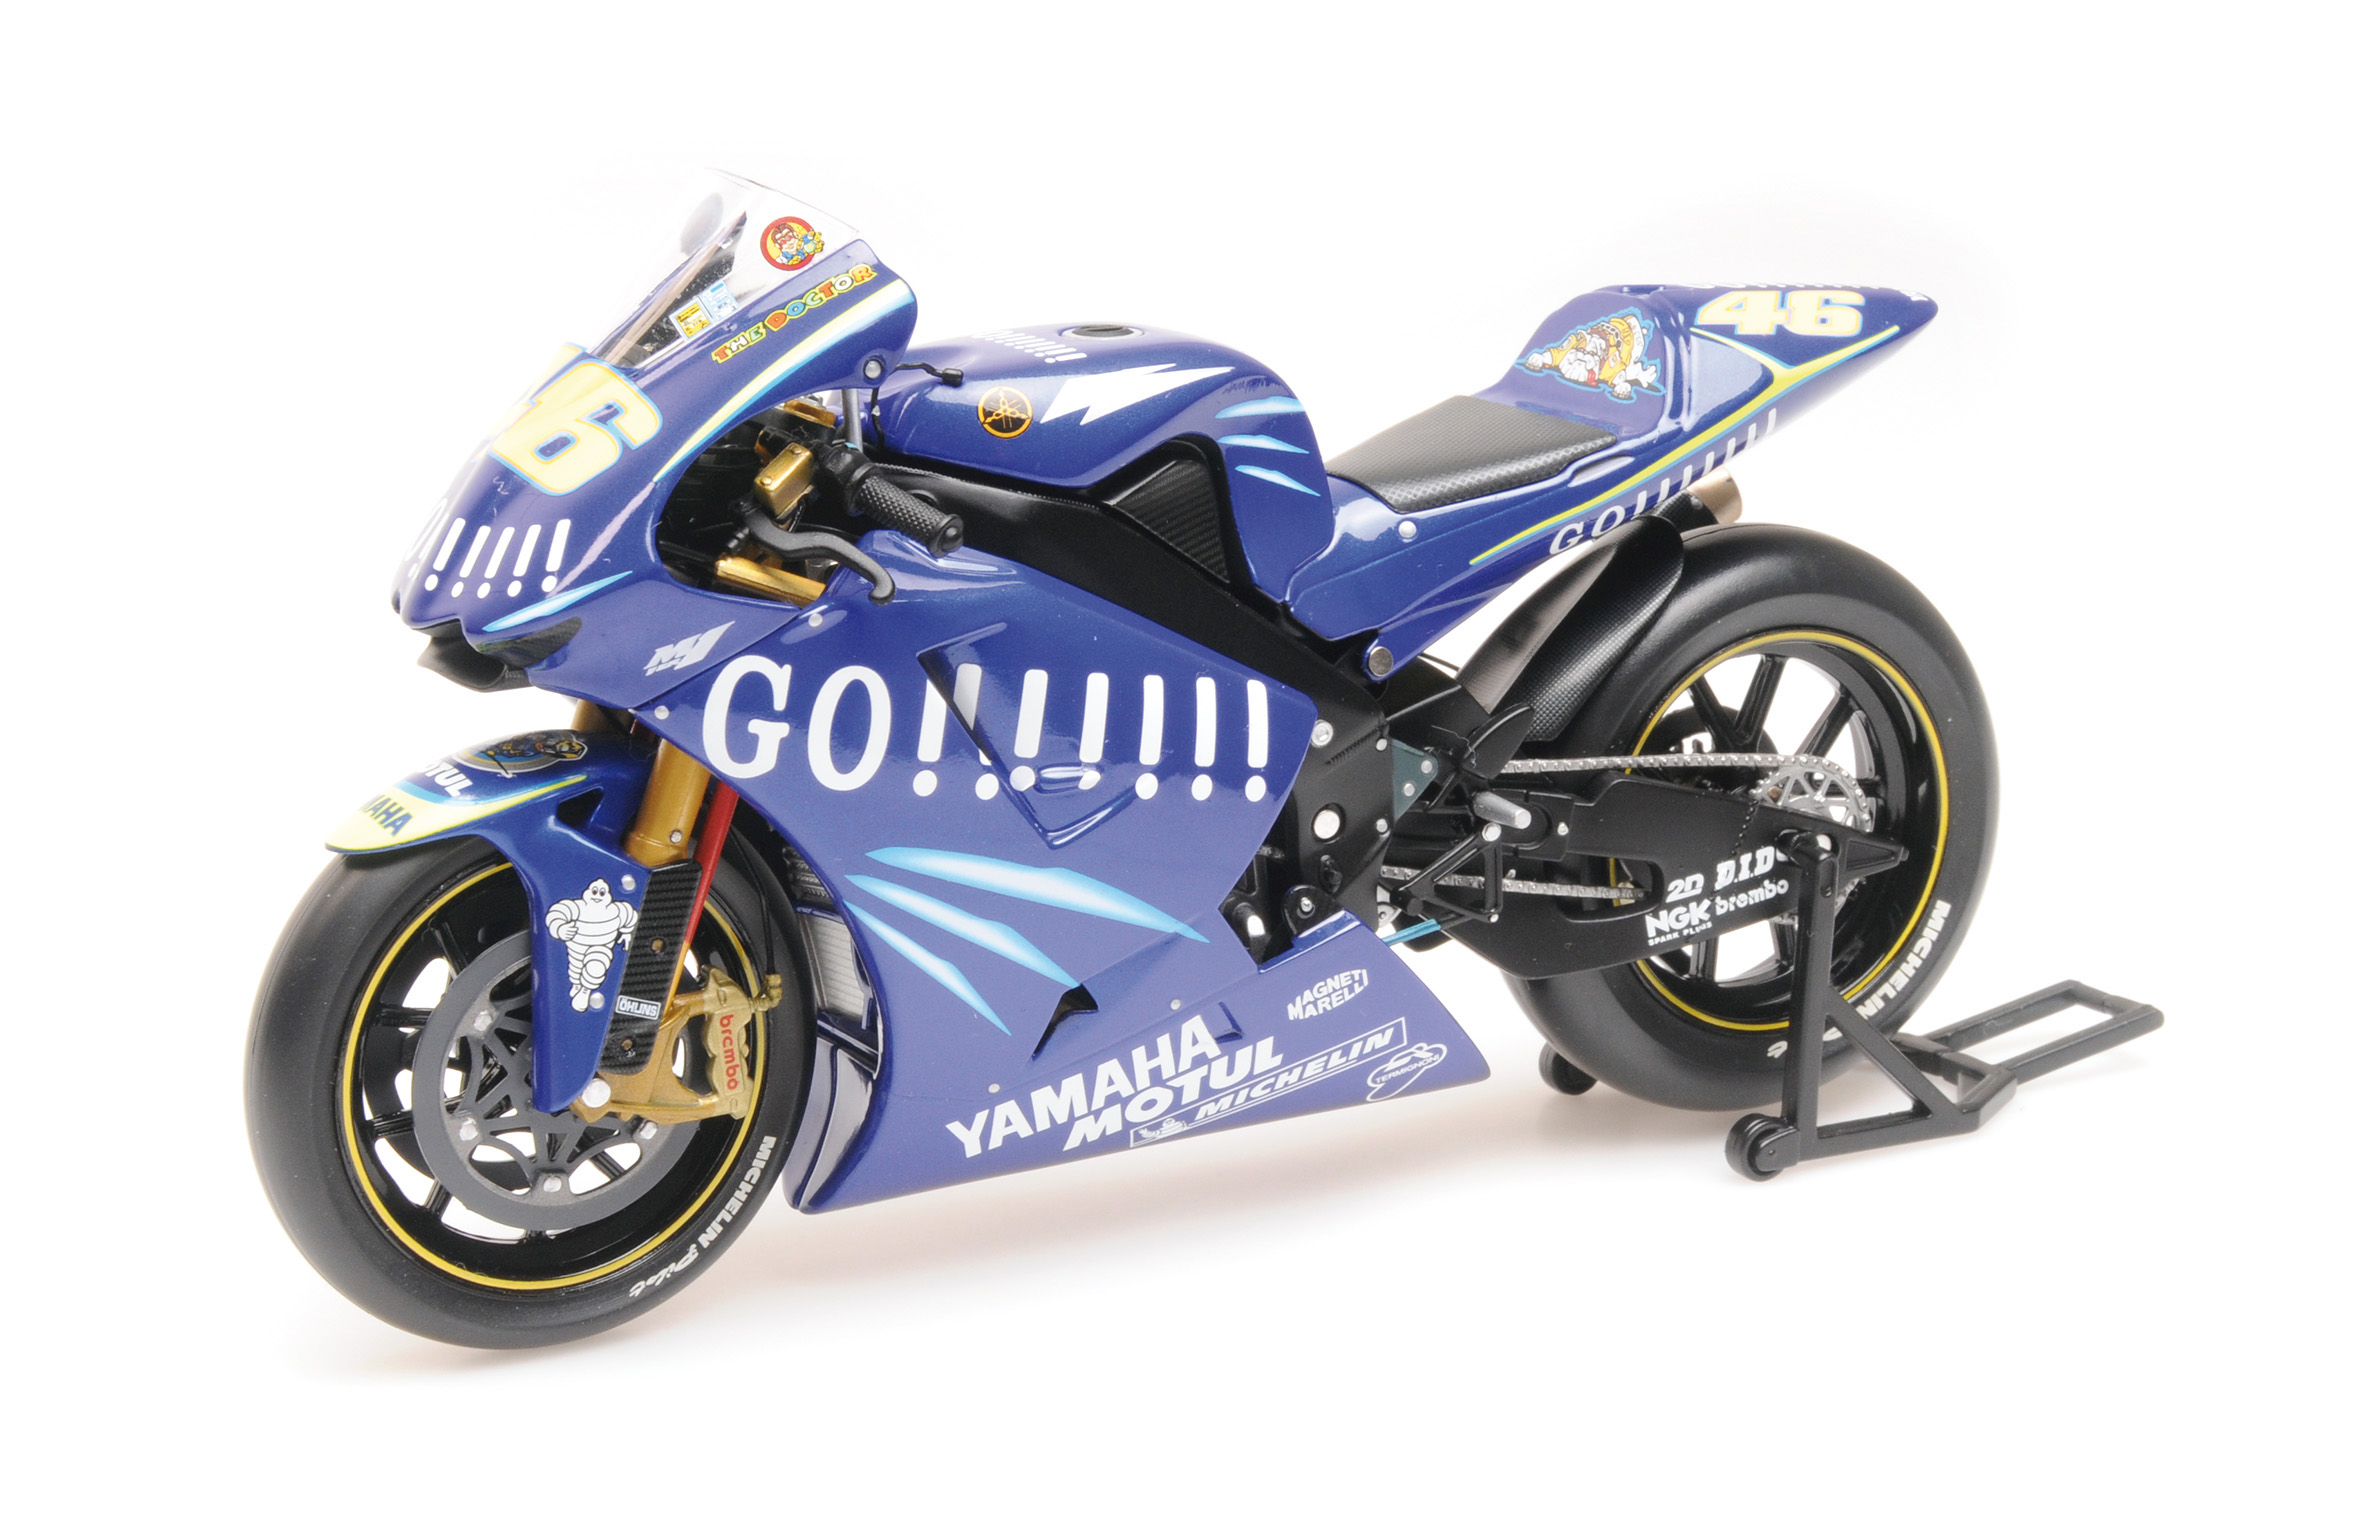  Jorge Lorenzo   MotoGP 2015 Modelo de Juguete Escala 1: 12 Minichamps 122153099 Yamaha ytz-m1   MOVISTAR  